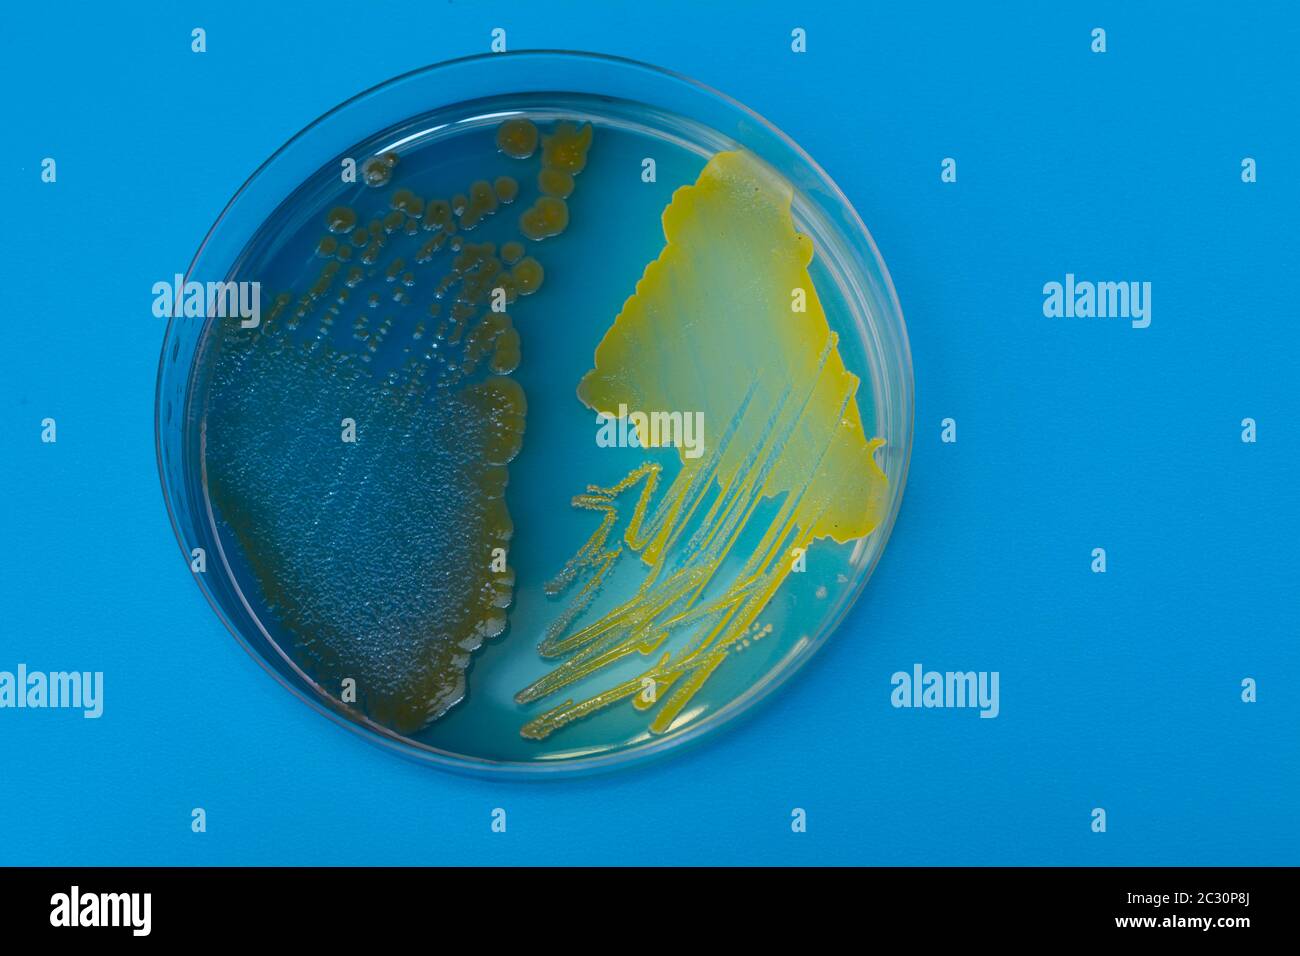 Petri dish with bacteria on blue background. Staphylococcus aureus and pseudomonas aeruginosa bacteria on cled agar Stock Photo